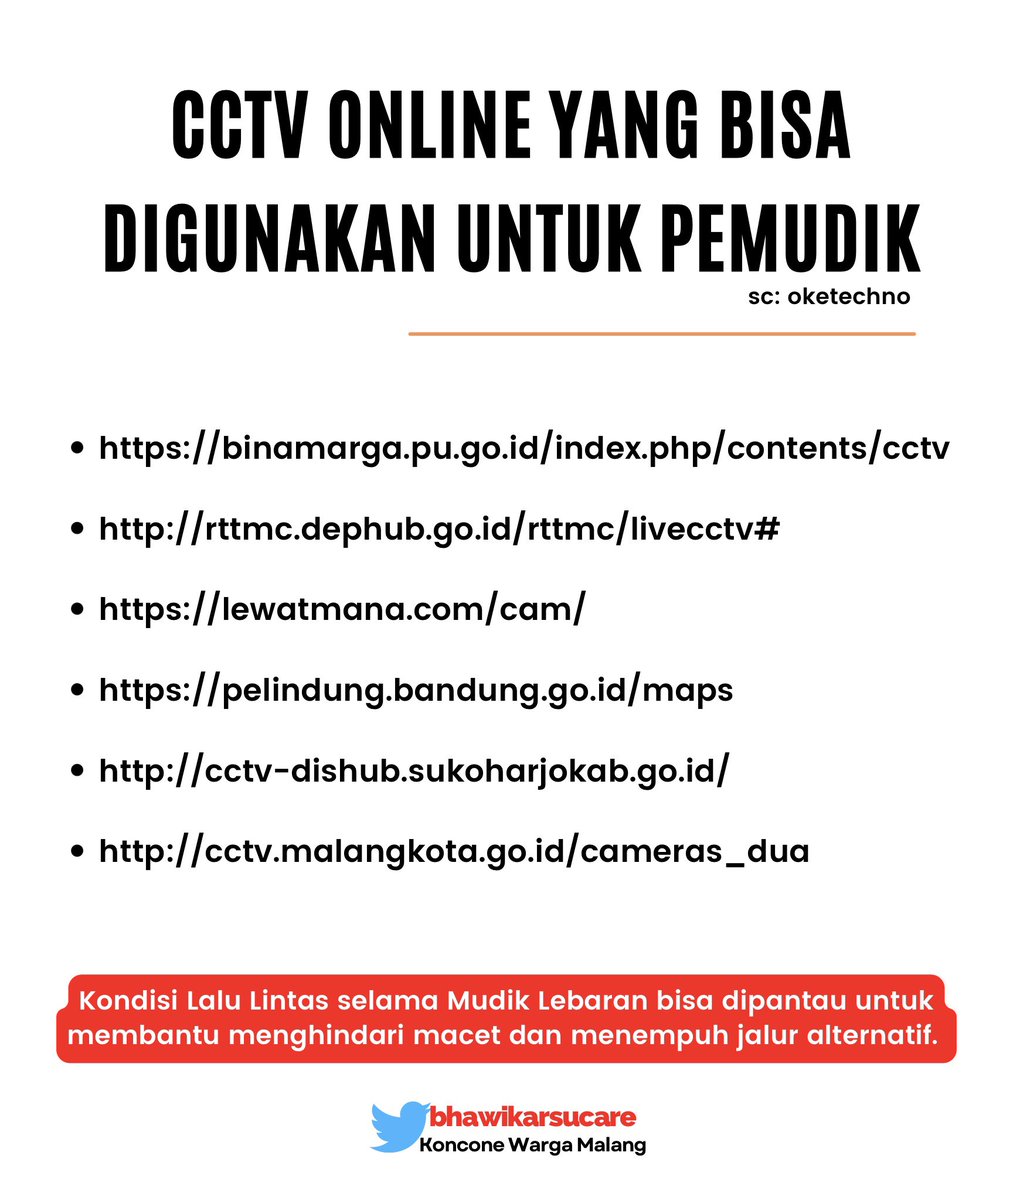 LINK CCTV Online yg bisa dimanfaatkan untuk pemudik. #infomudik 

binamarga.pu.go.id/index.php/cont…

rttmc.dephub.go.id/rttmc/livecctv#

lewatmana.com/cam/

pelindung.bandung.go.id/maps

cctv-dishub.sukoharjokab.go.id

cctv.malangkota.go.id/cameras_dua